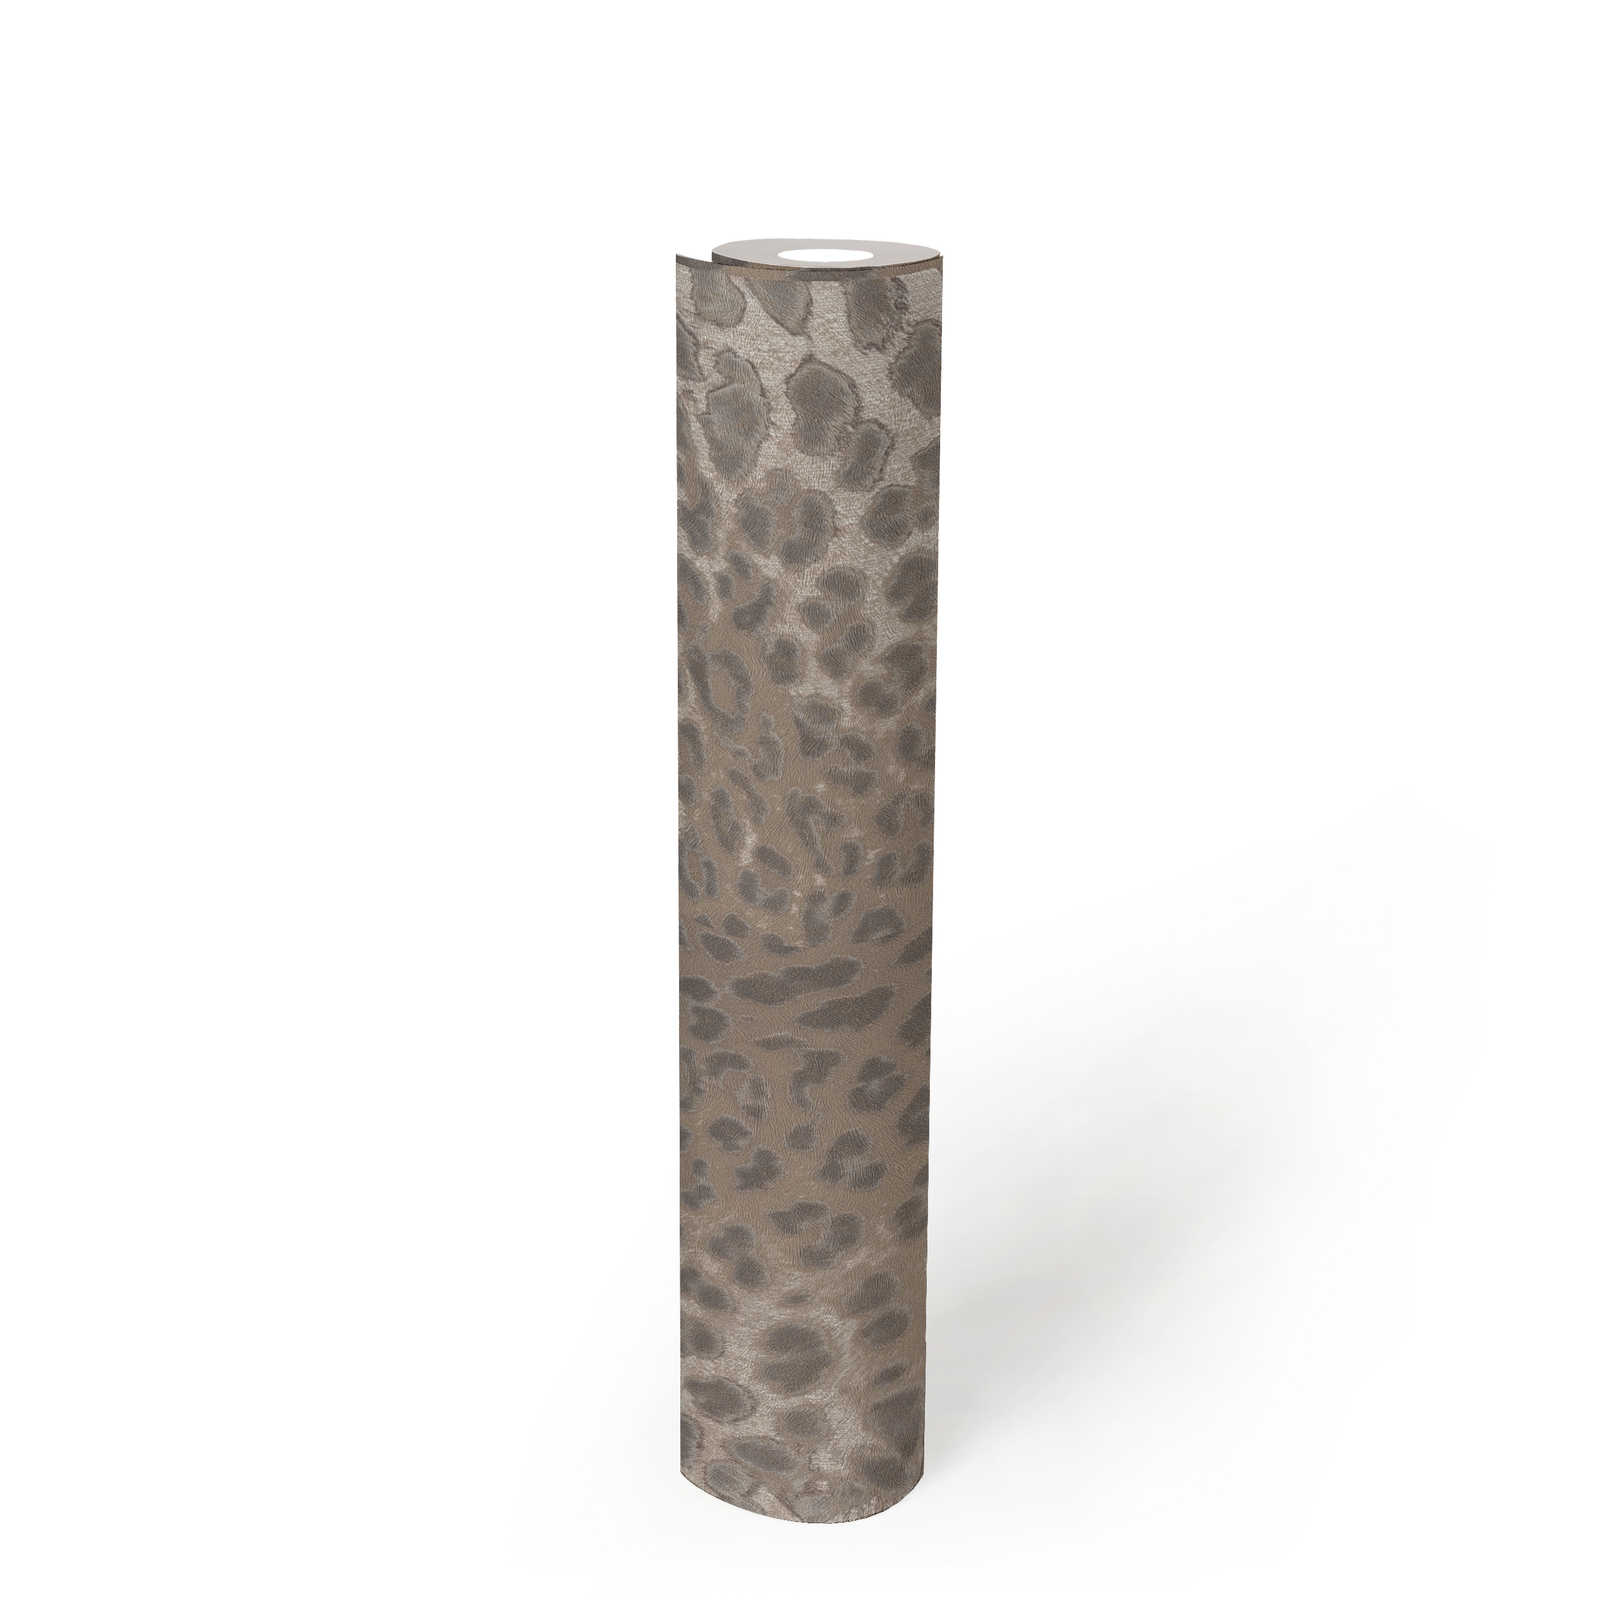             Wallpaper Animal Print Leopard Pattern - Beige, Metallic
        